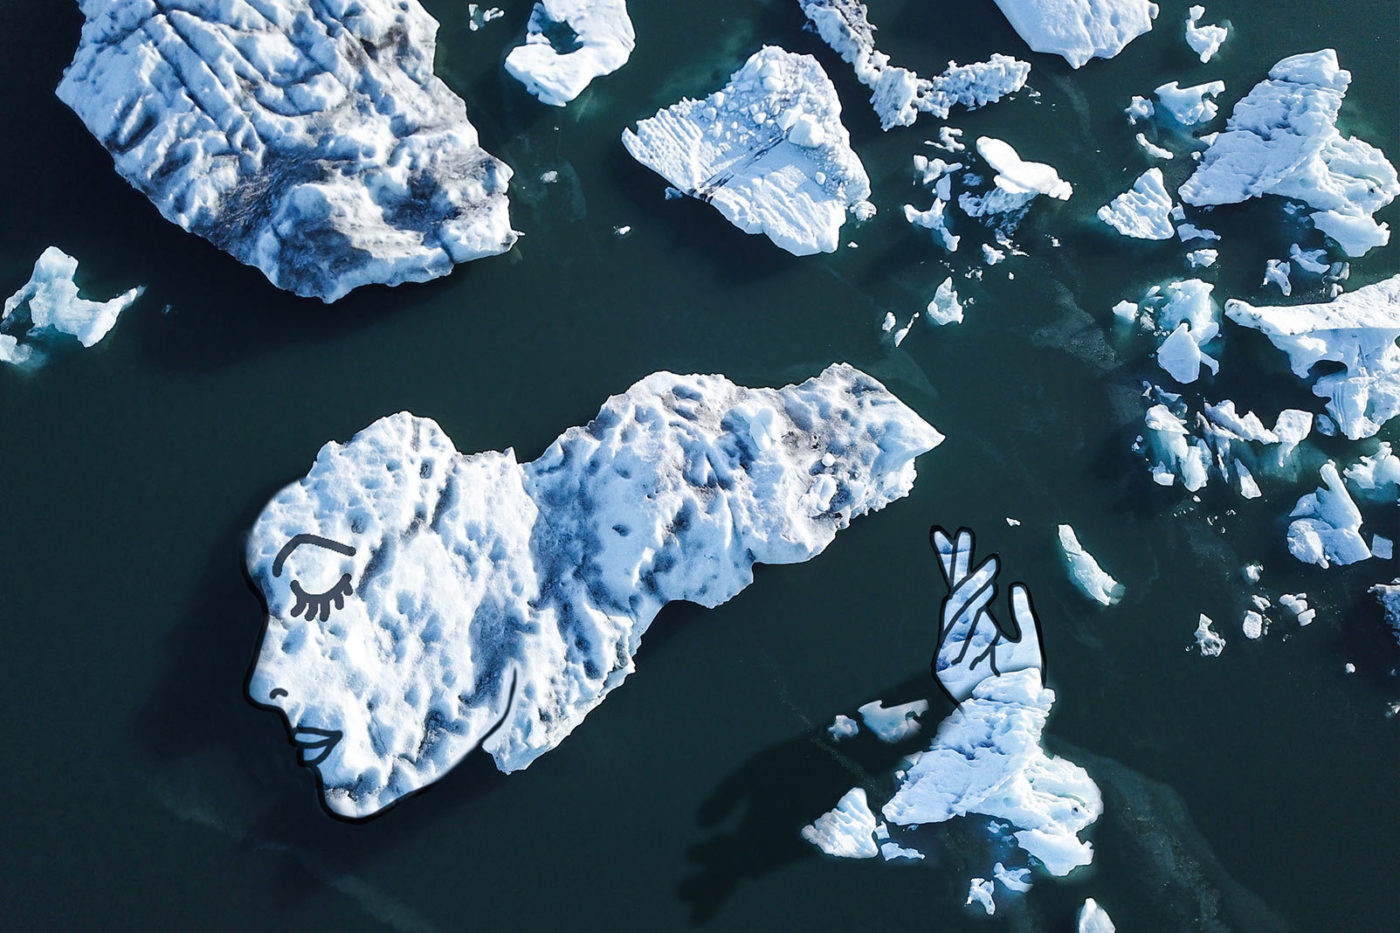 Human / Nature, digital drawing on artists own aerial photo. Jökulsárlón Glacier, Iceland